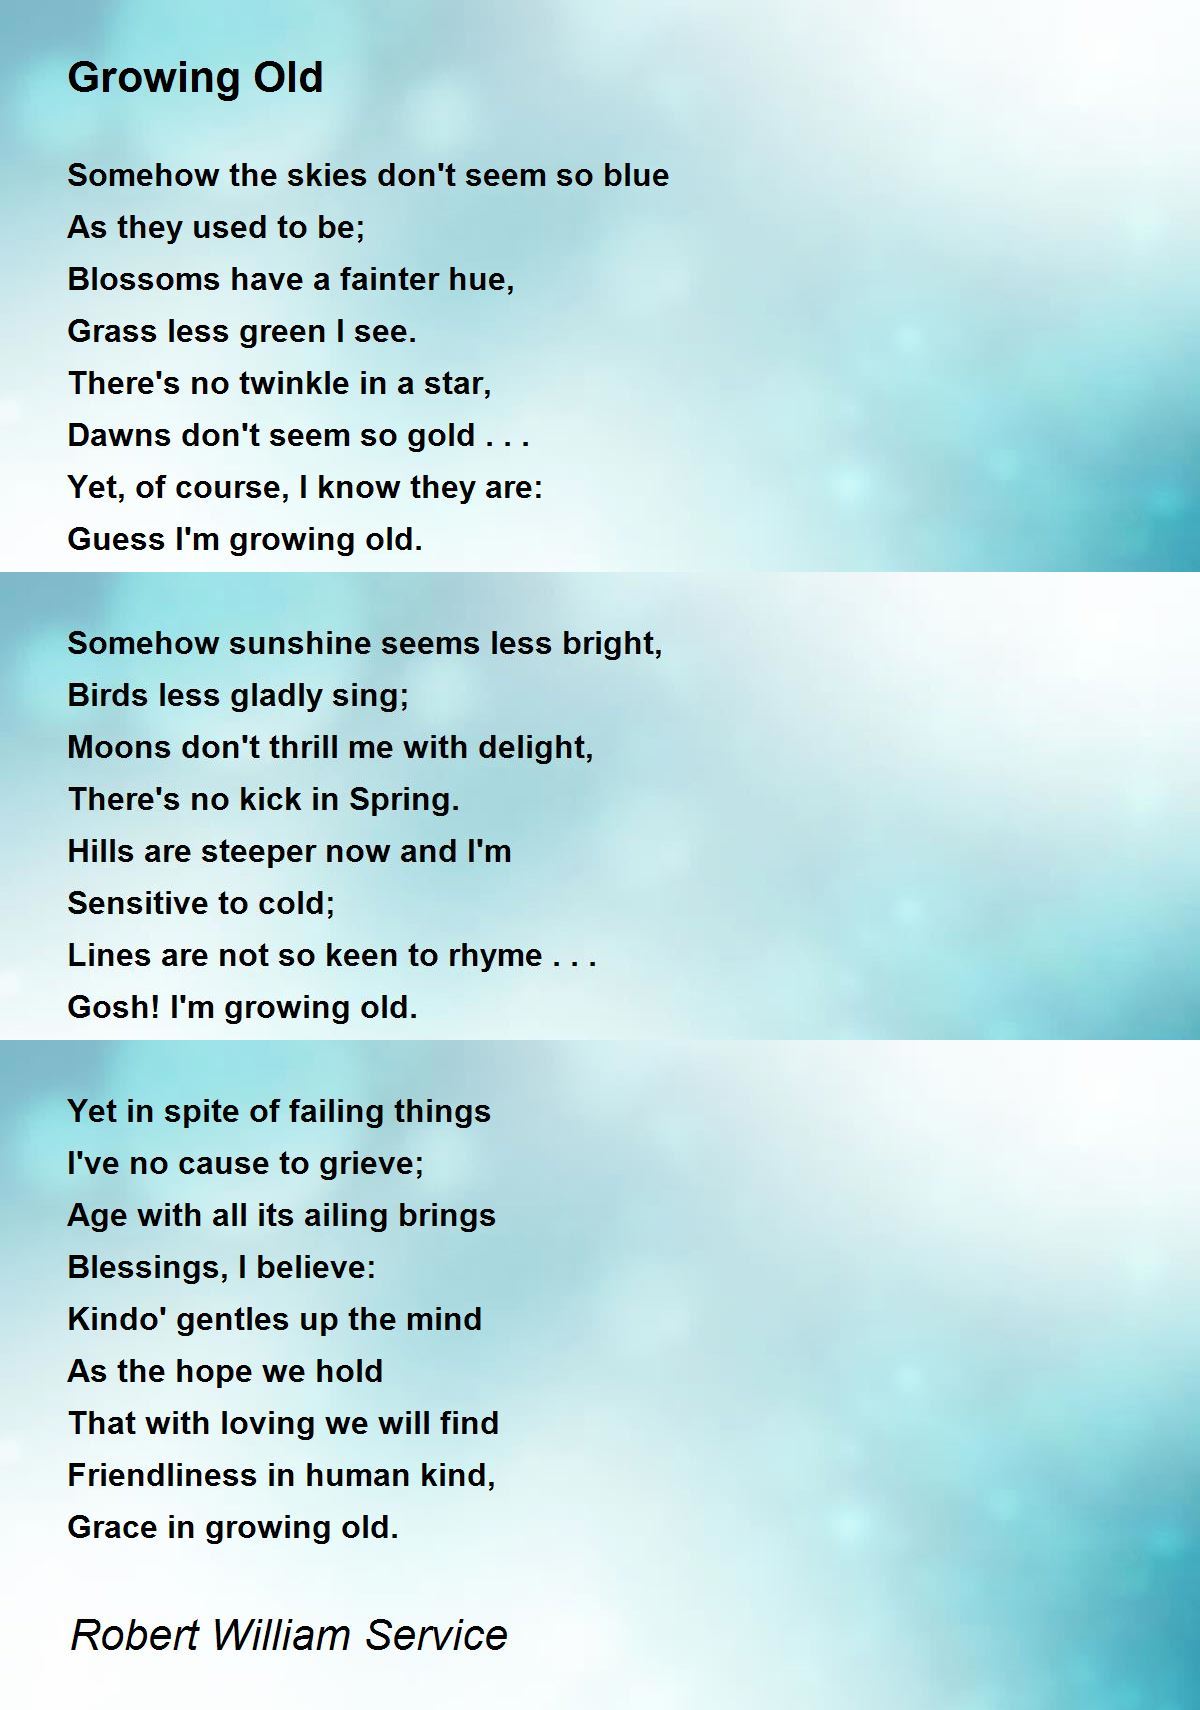 Growing Old Poem by Robert William Service - Poem Hunter